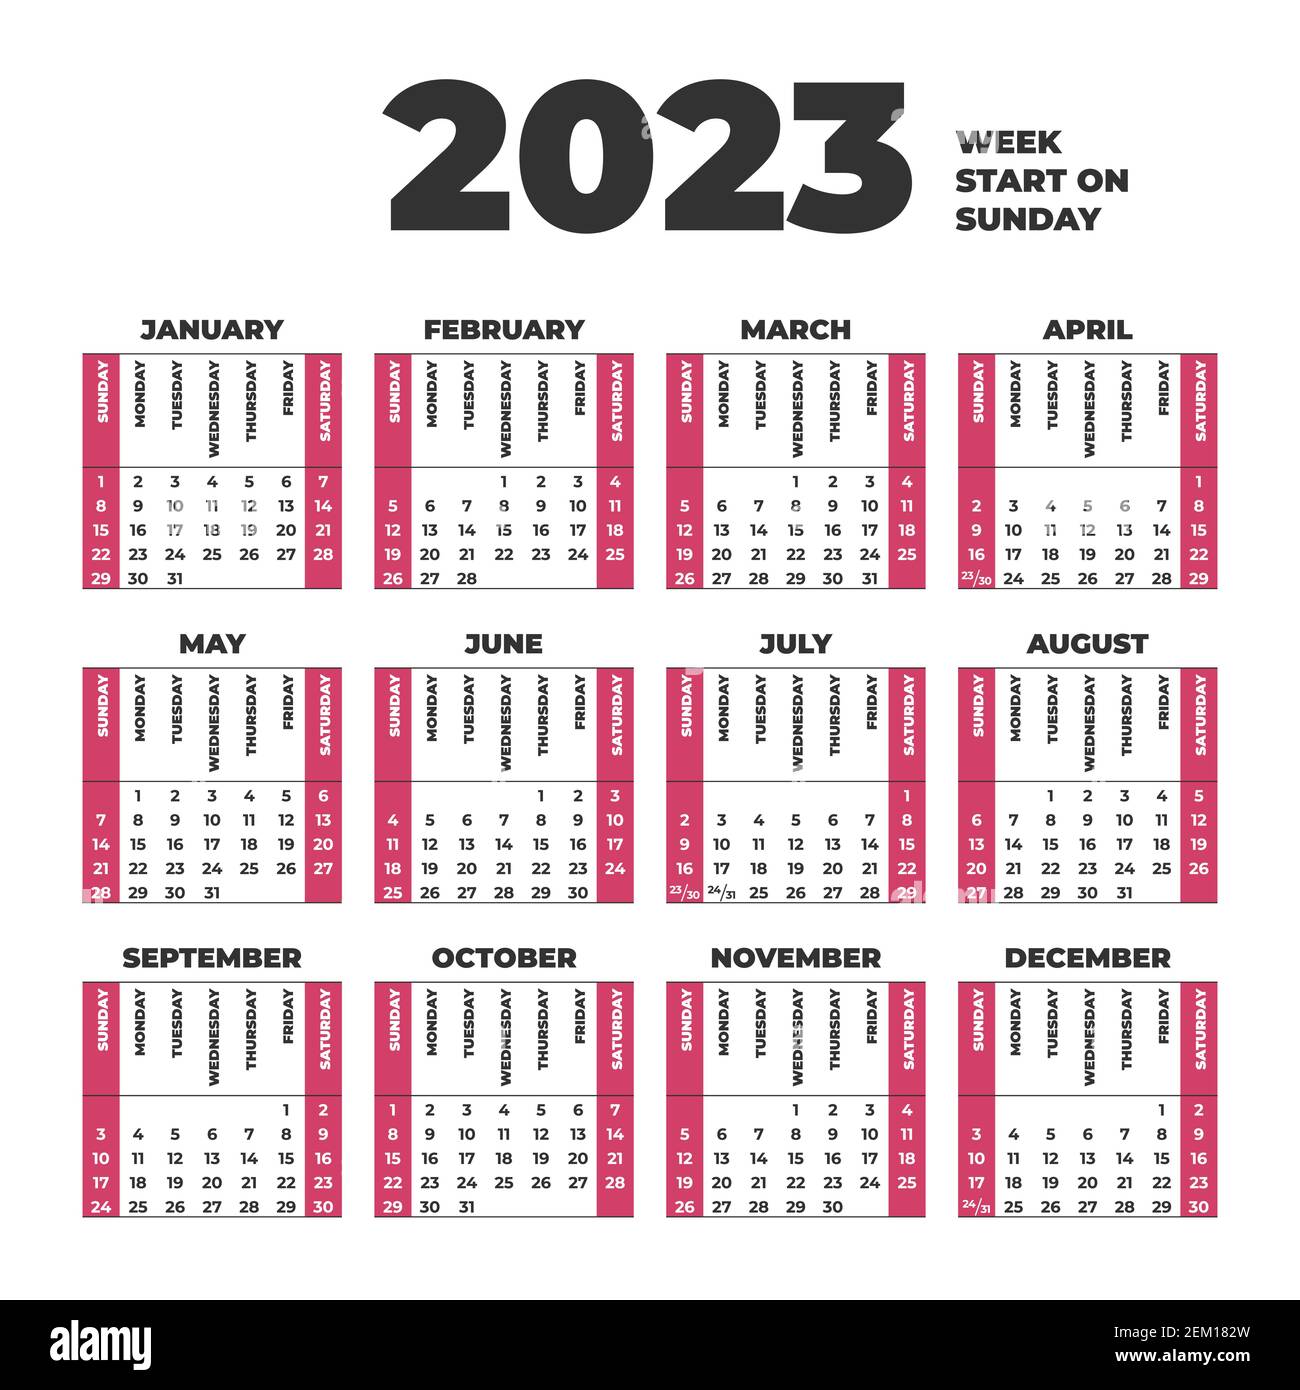 2023-how-many-days-until-christmas-untildays